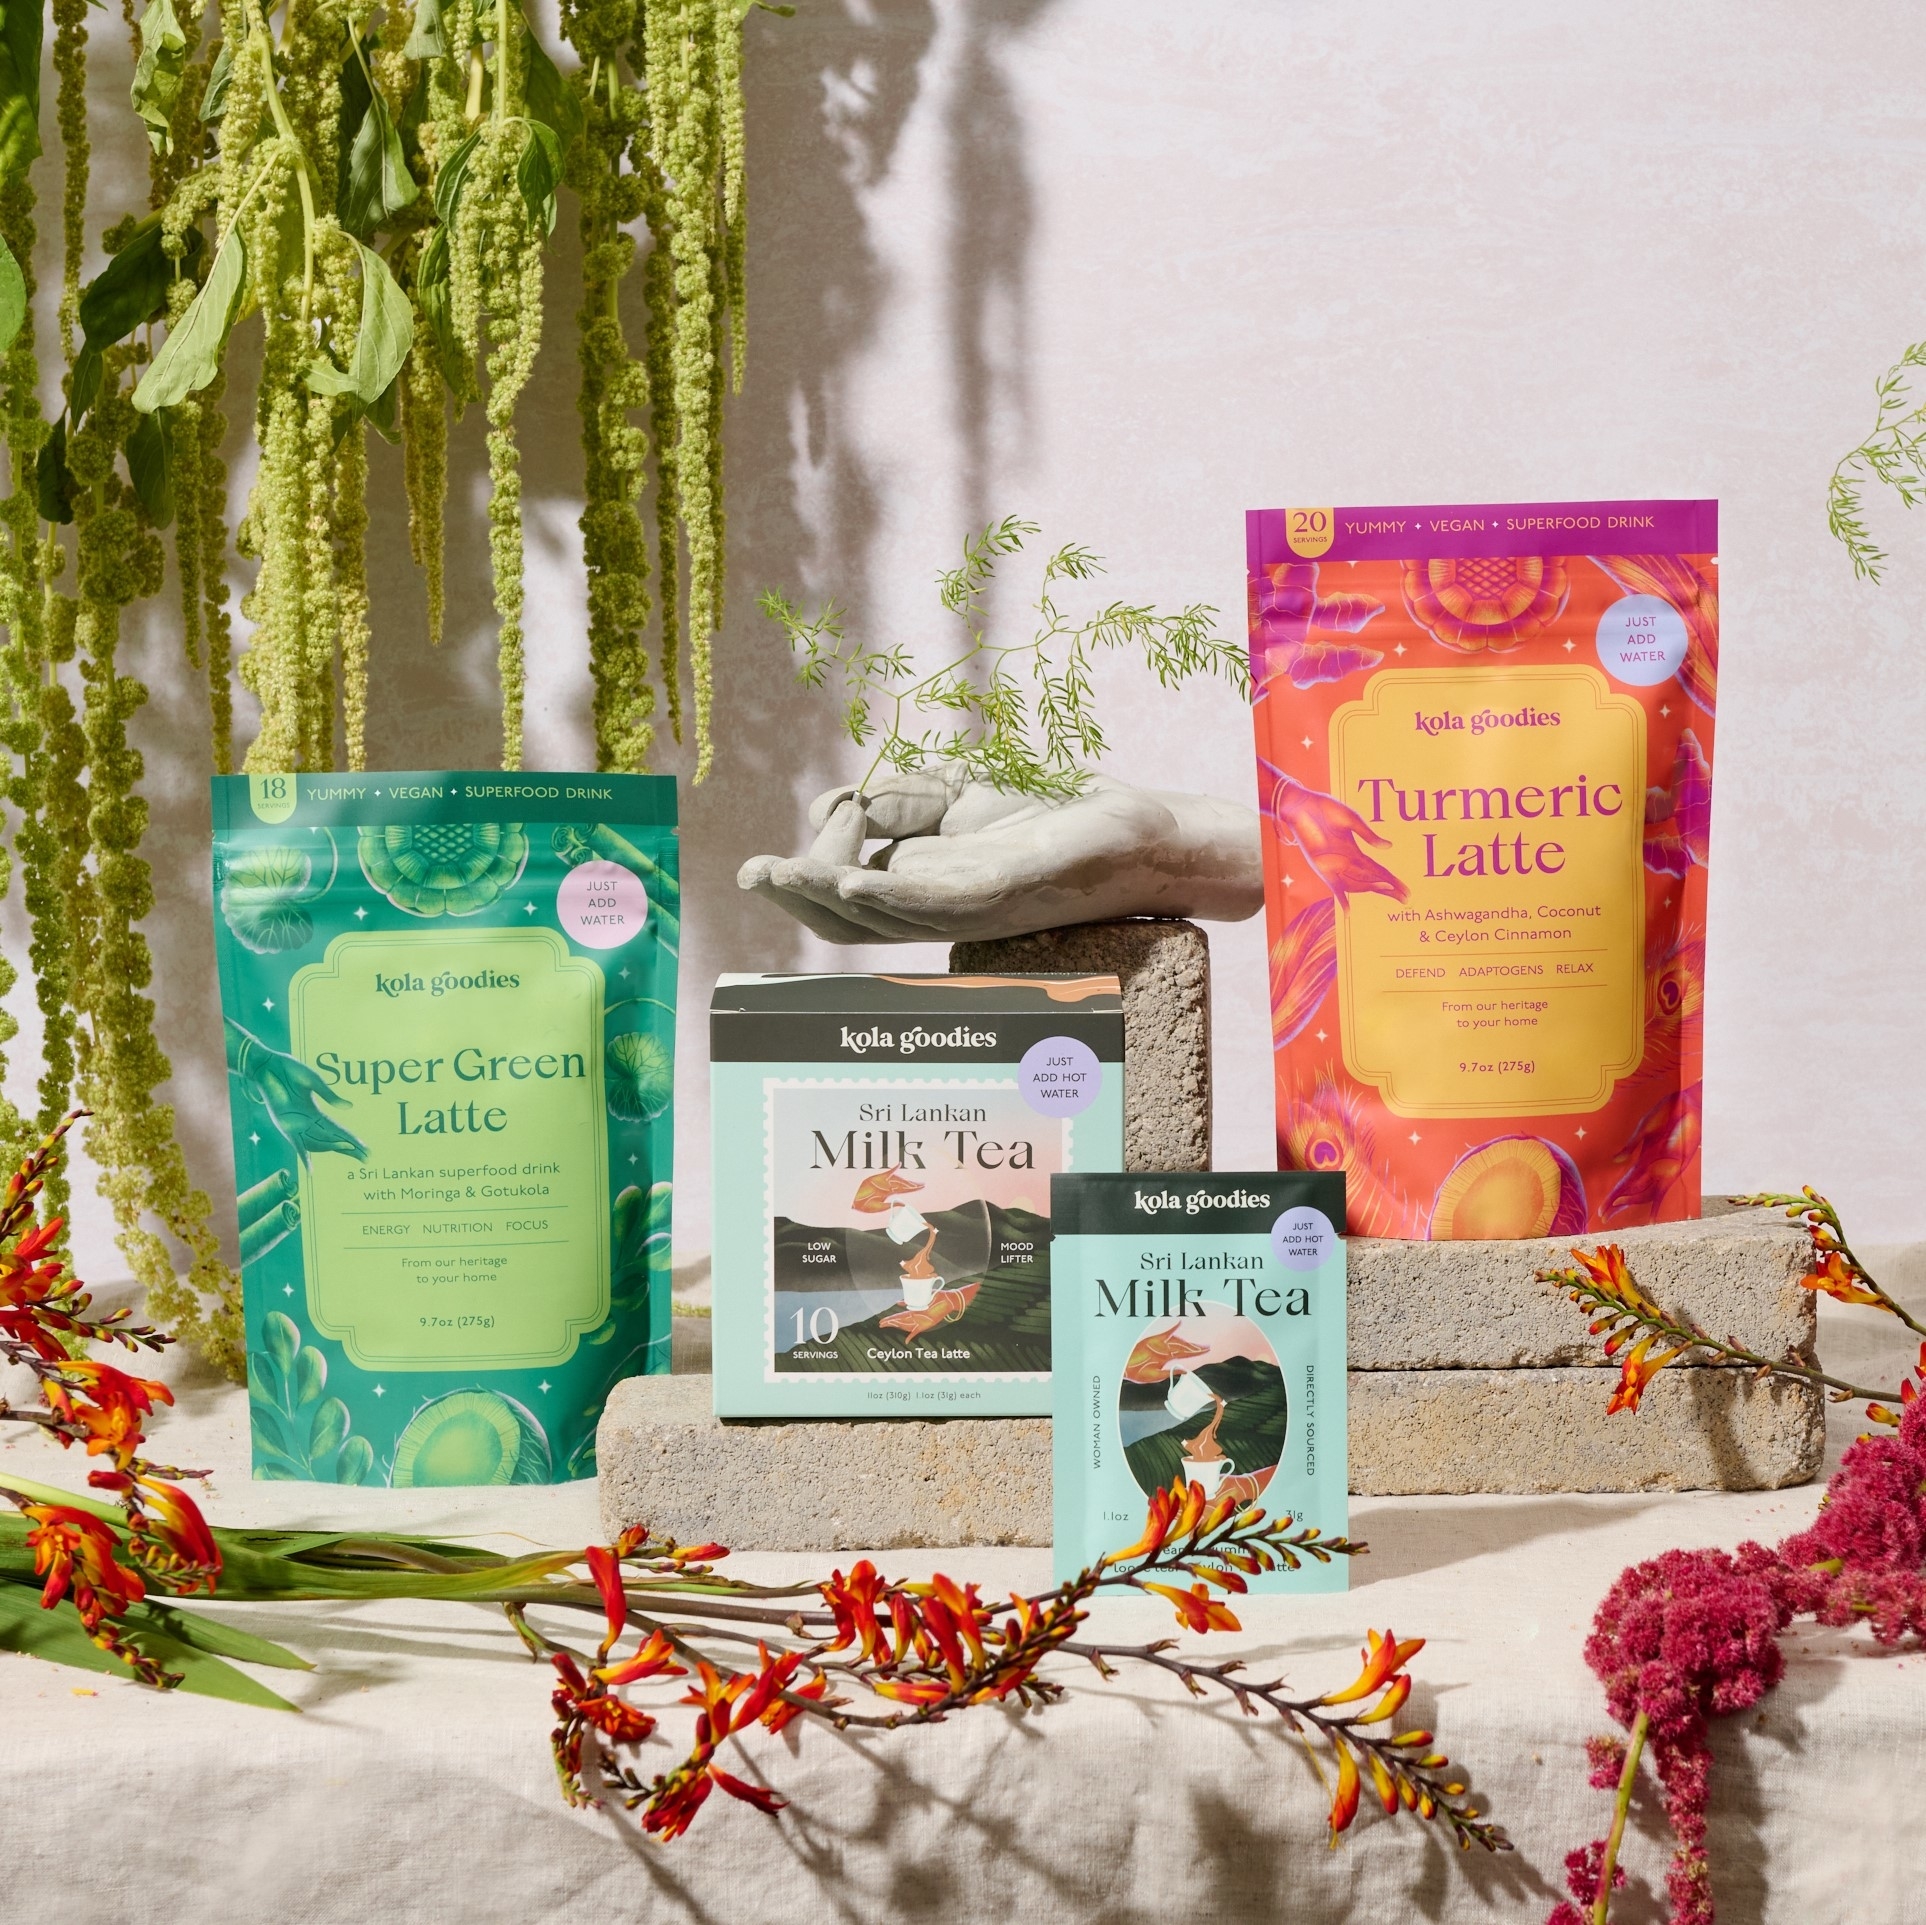 Assorted Kola Goodies beverage mixes displayed with decorative plants and stones